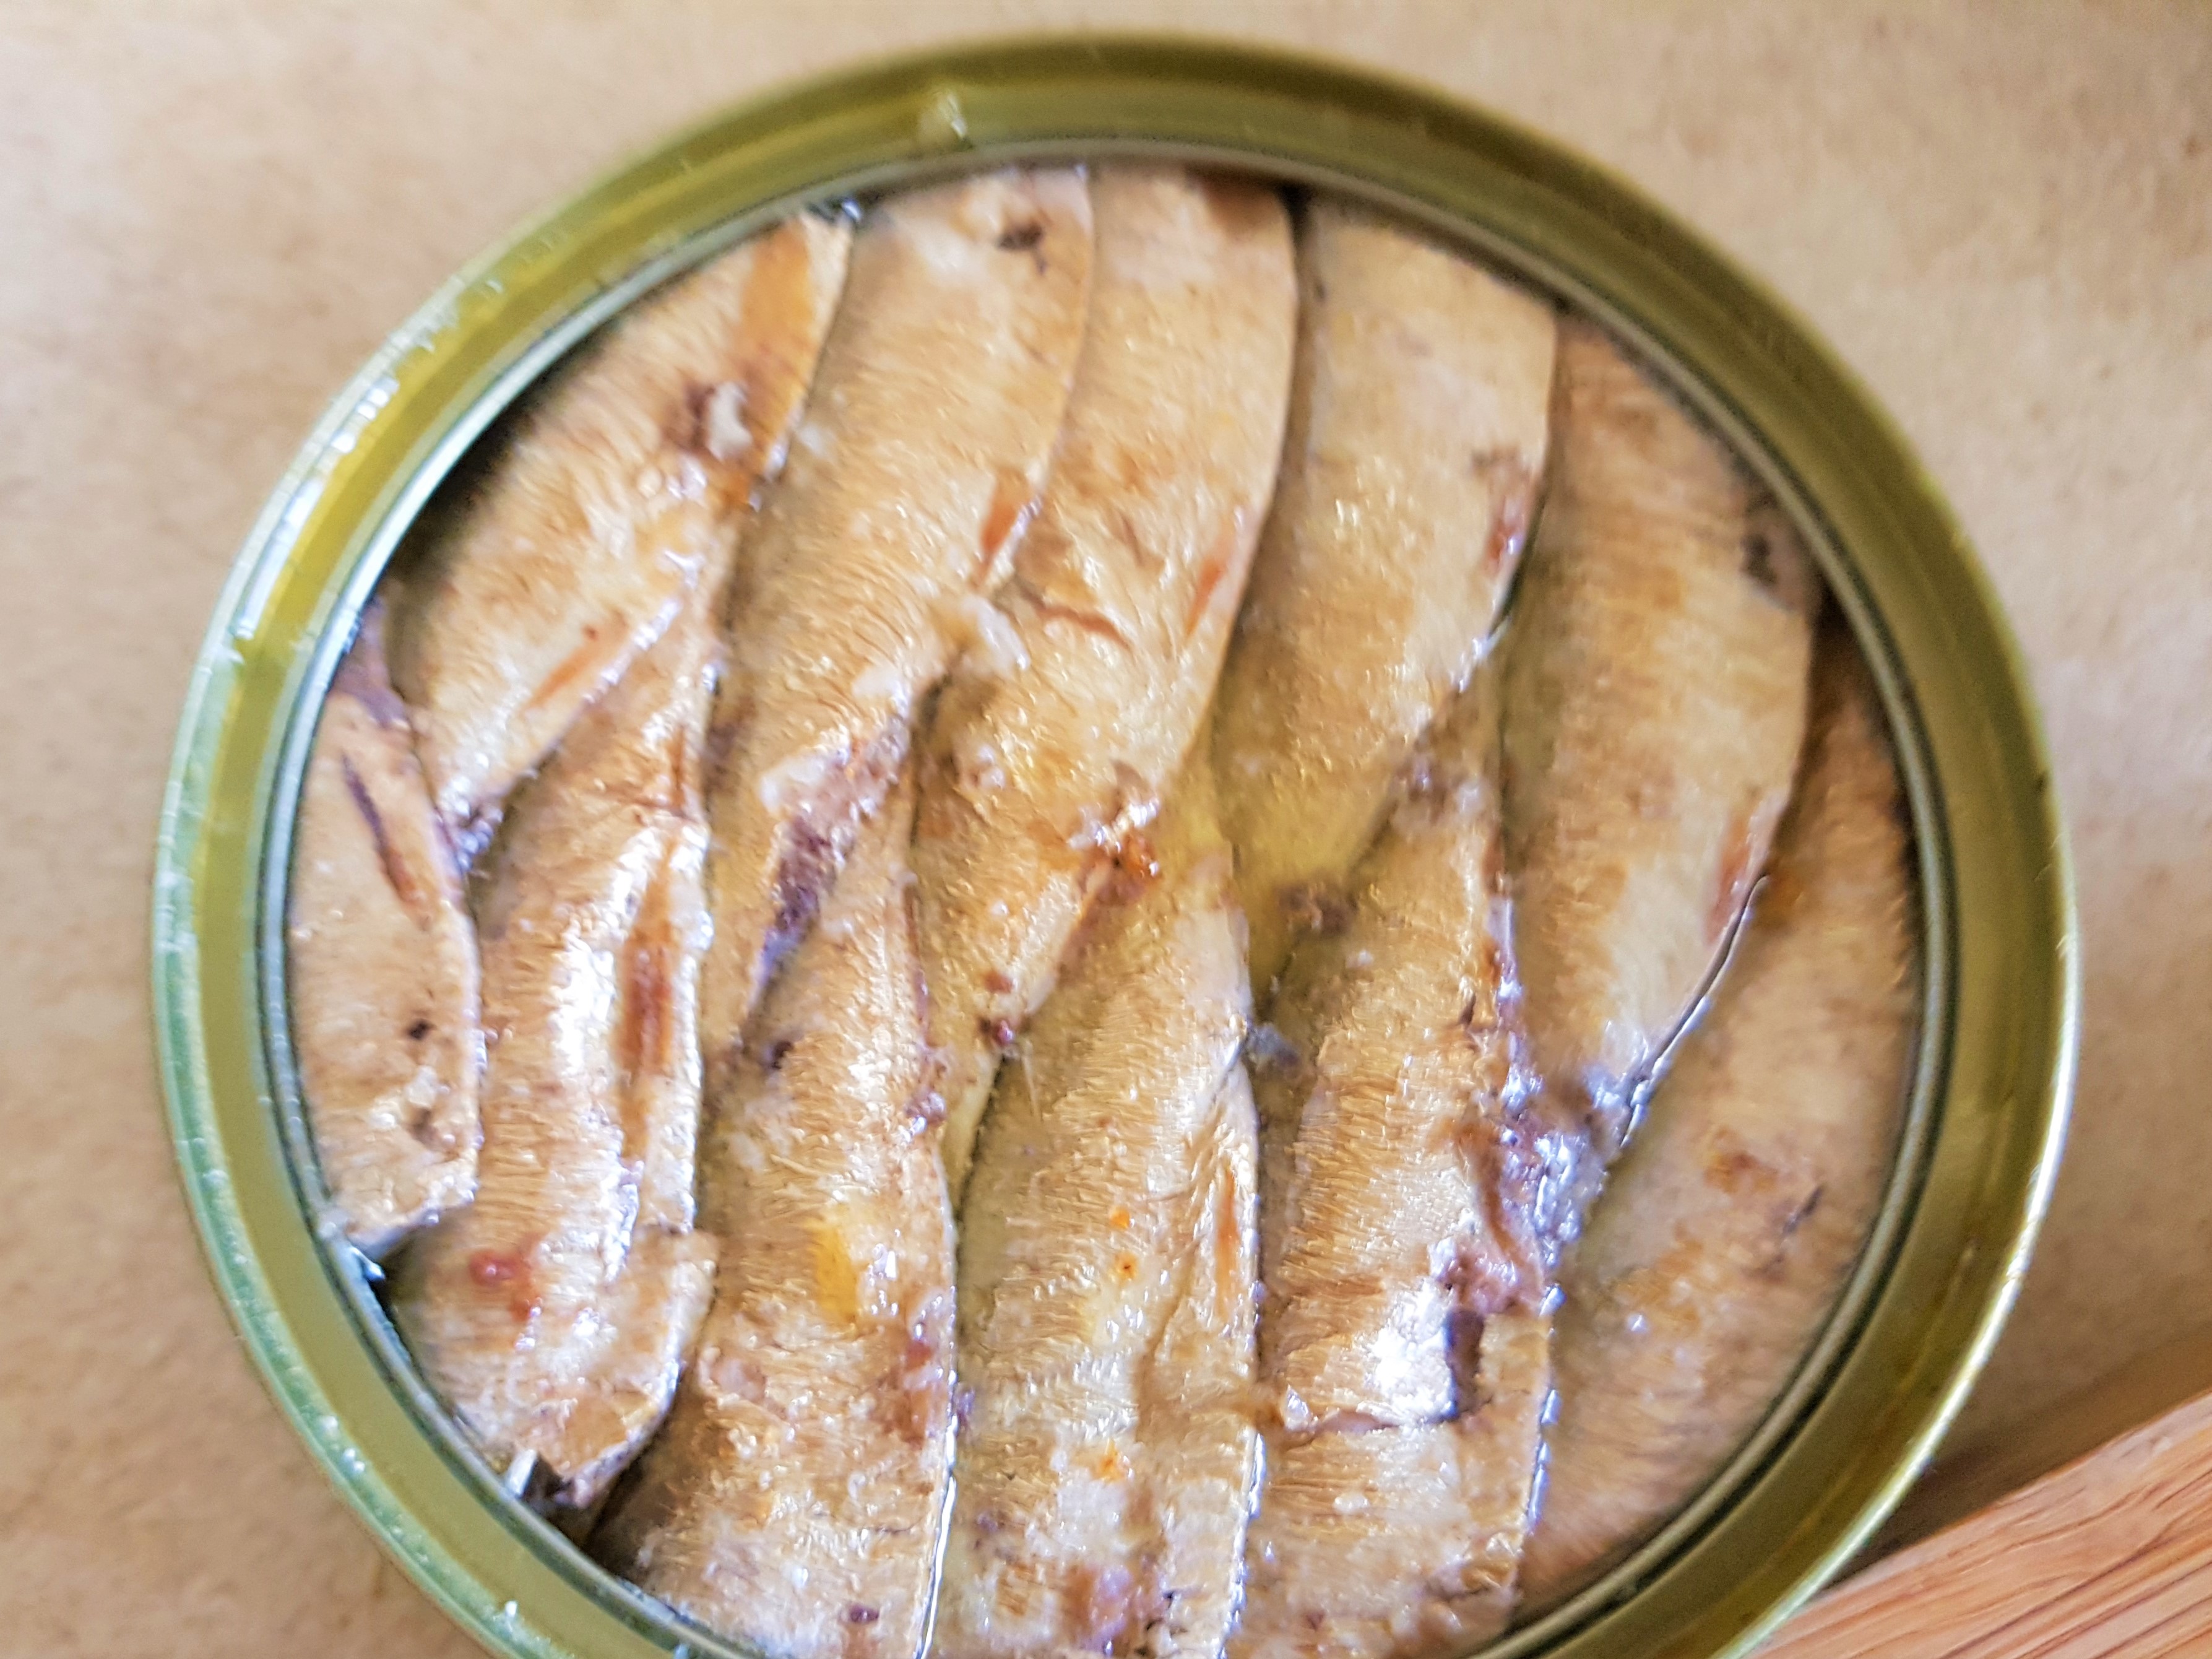 Salata cu sardine afumate si ardei copt marinat